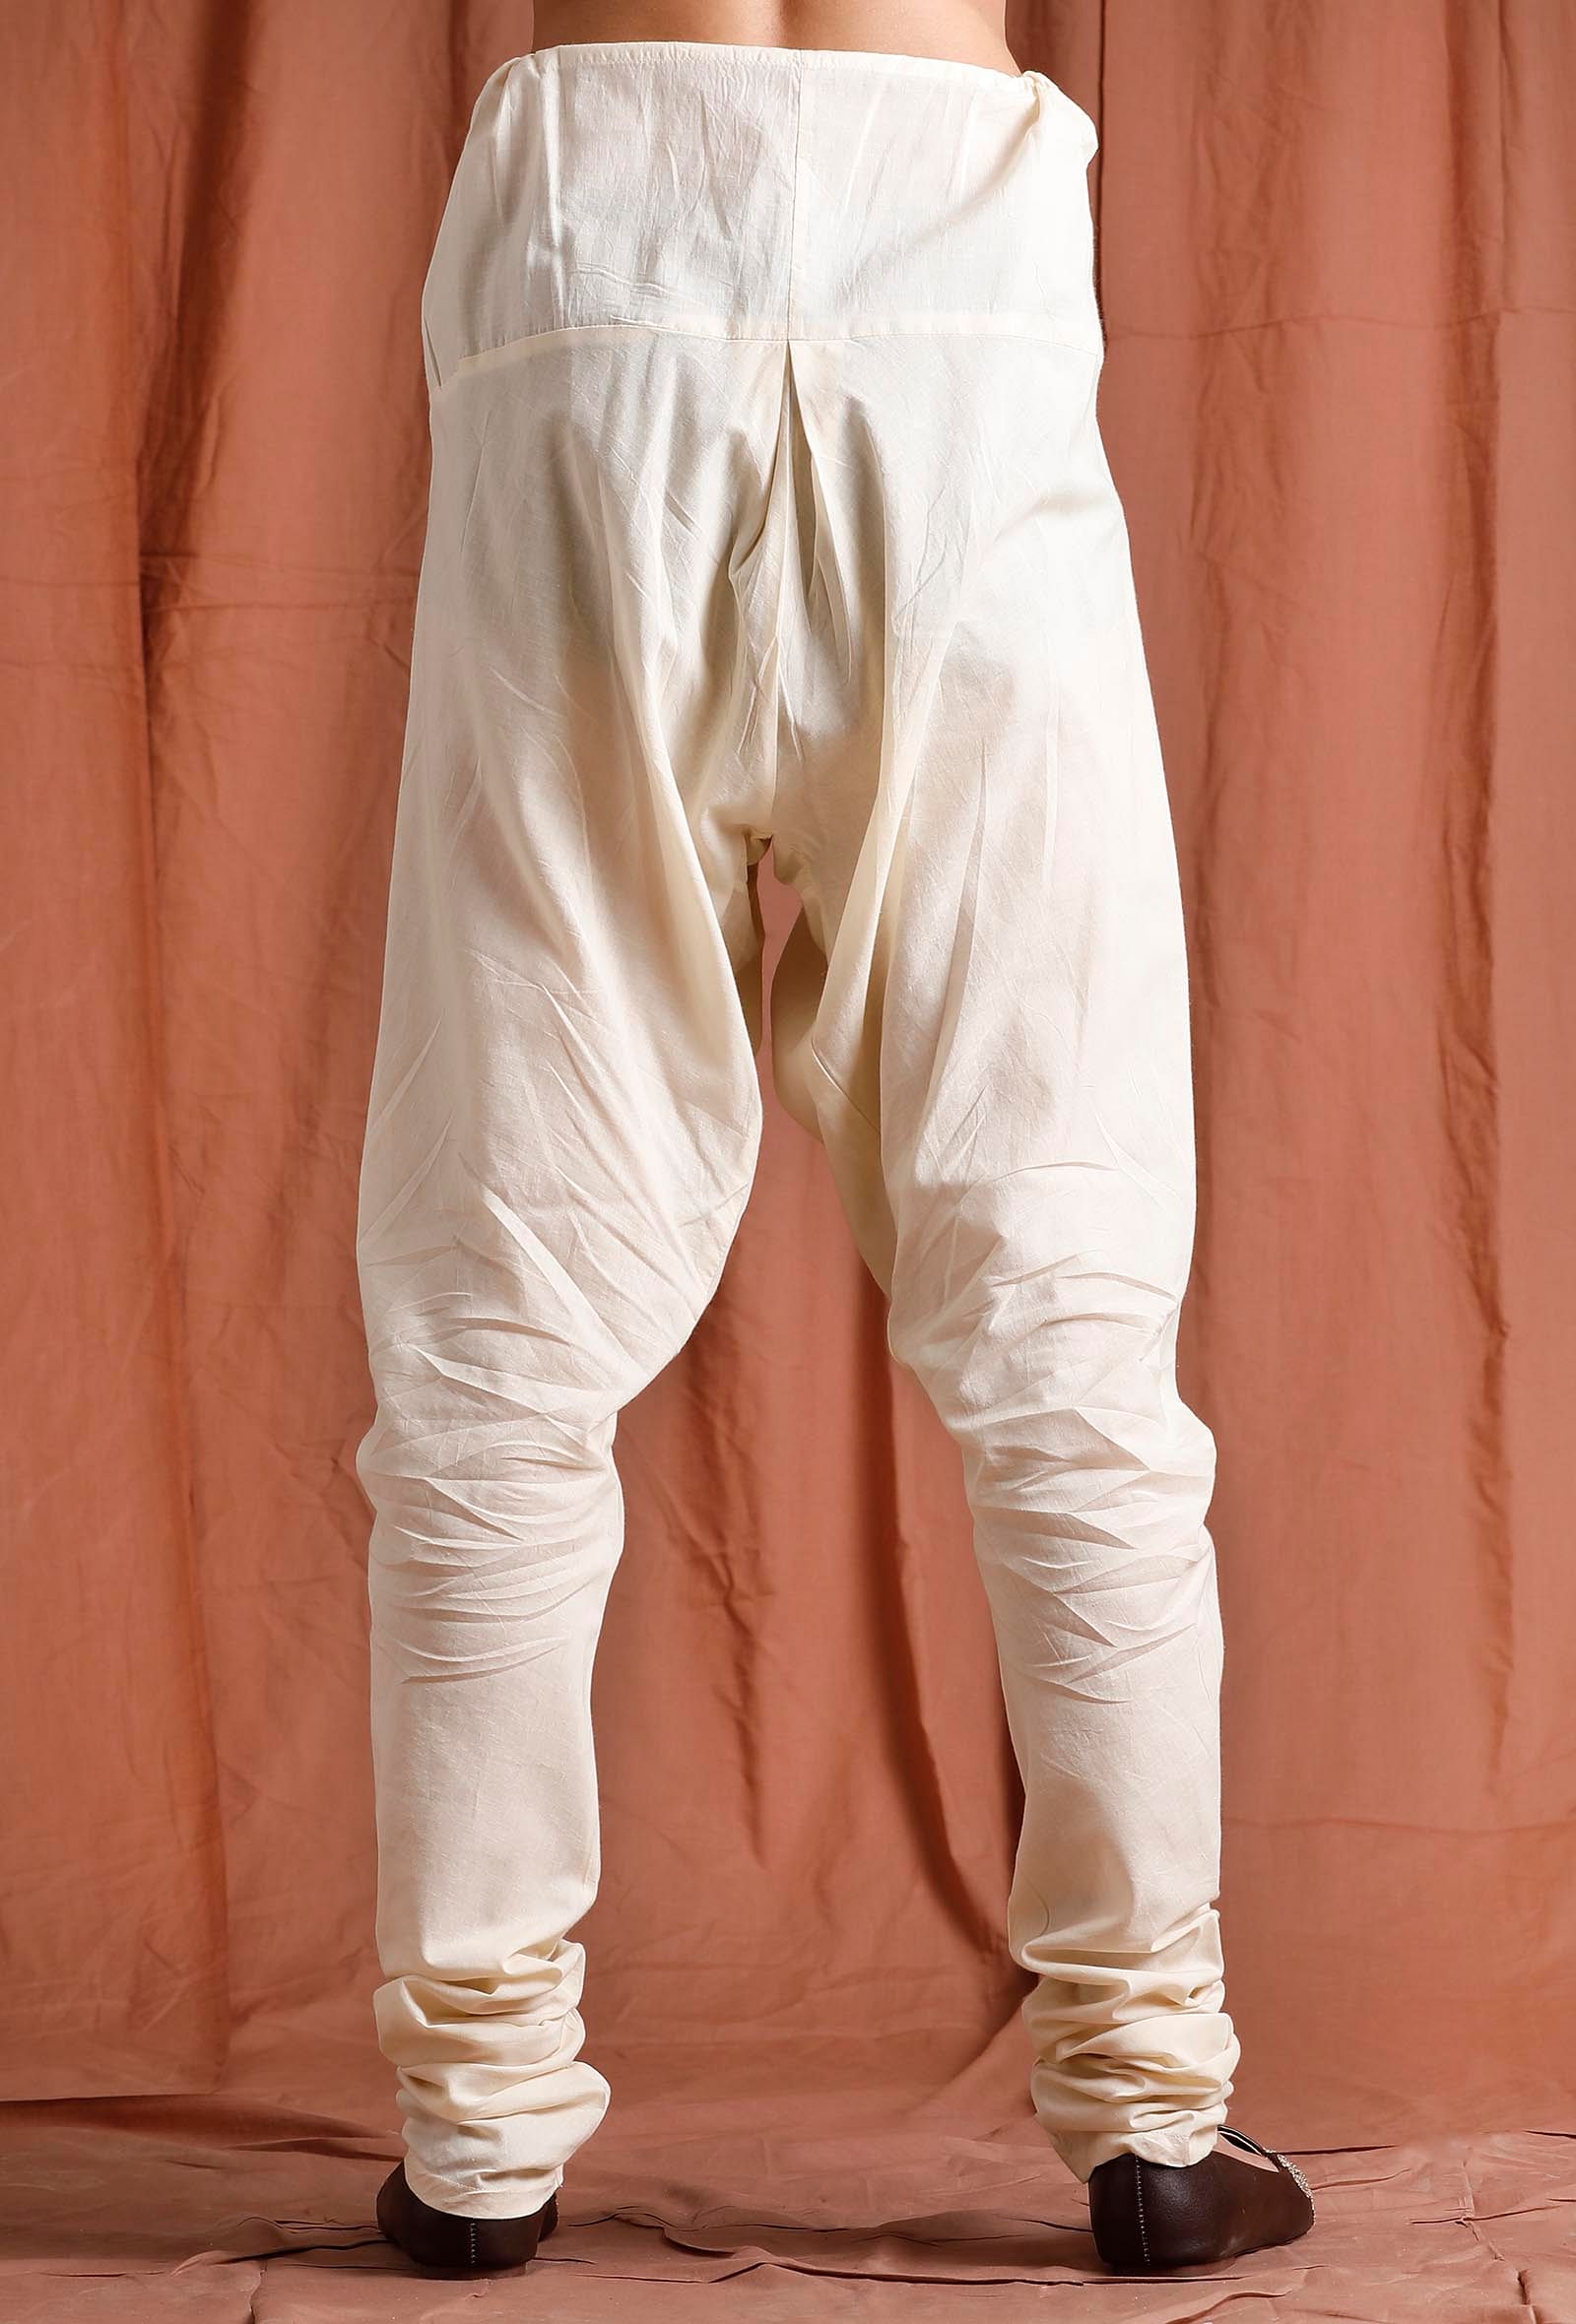 uphar Silk churidar pyjama for mens Size Free Size